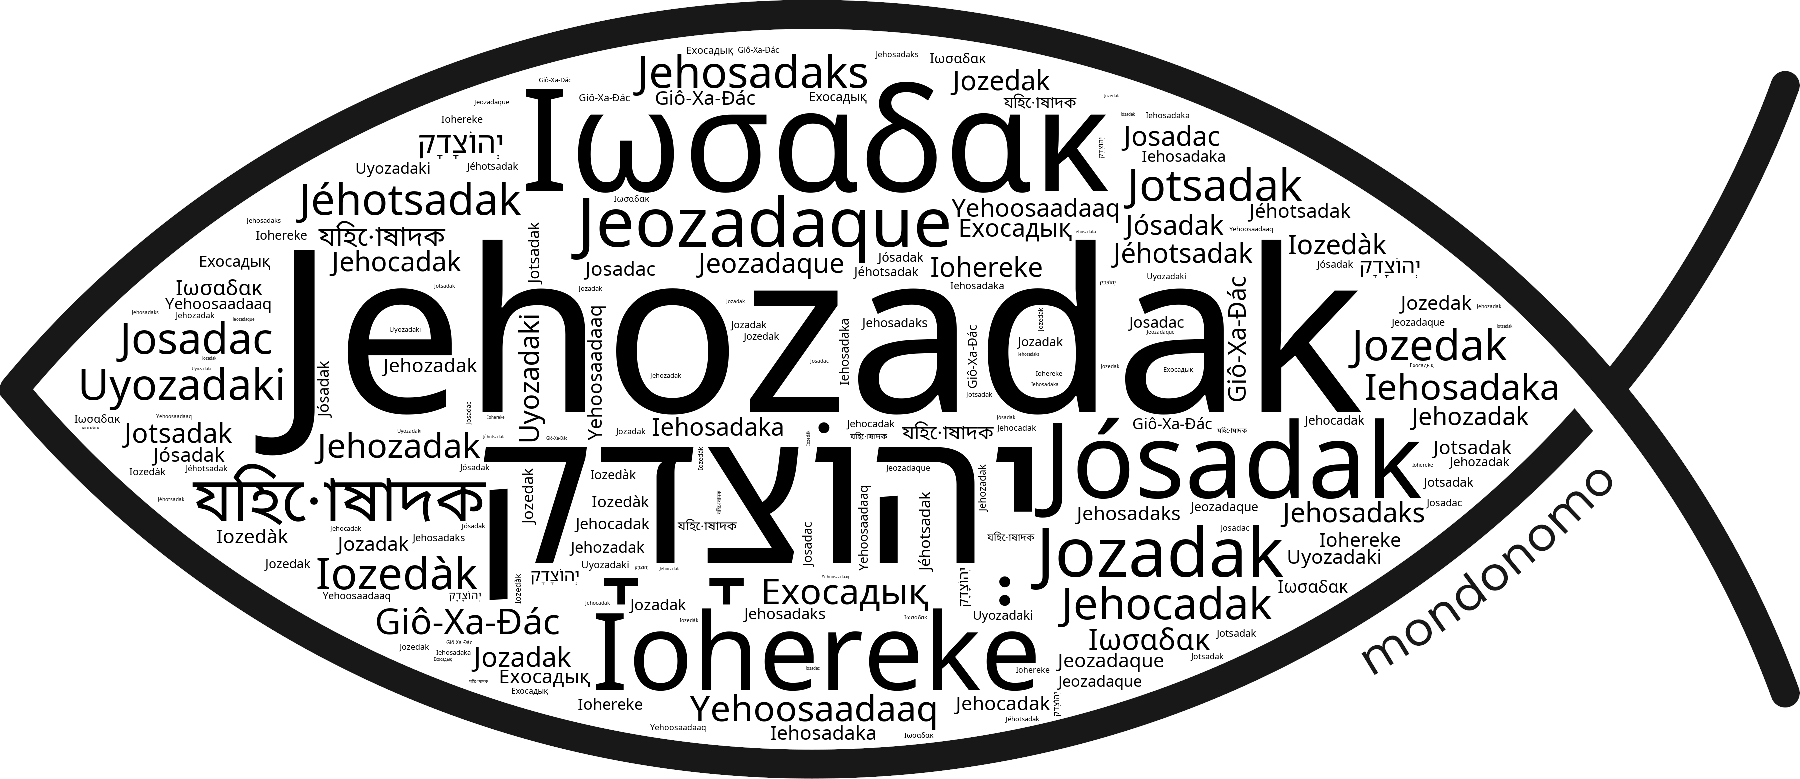 Name Jehozadak in the world's Bibles